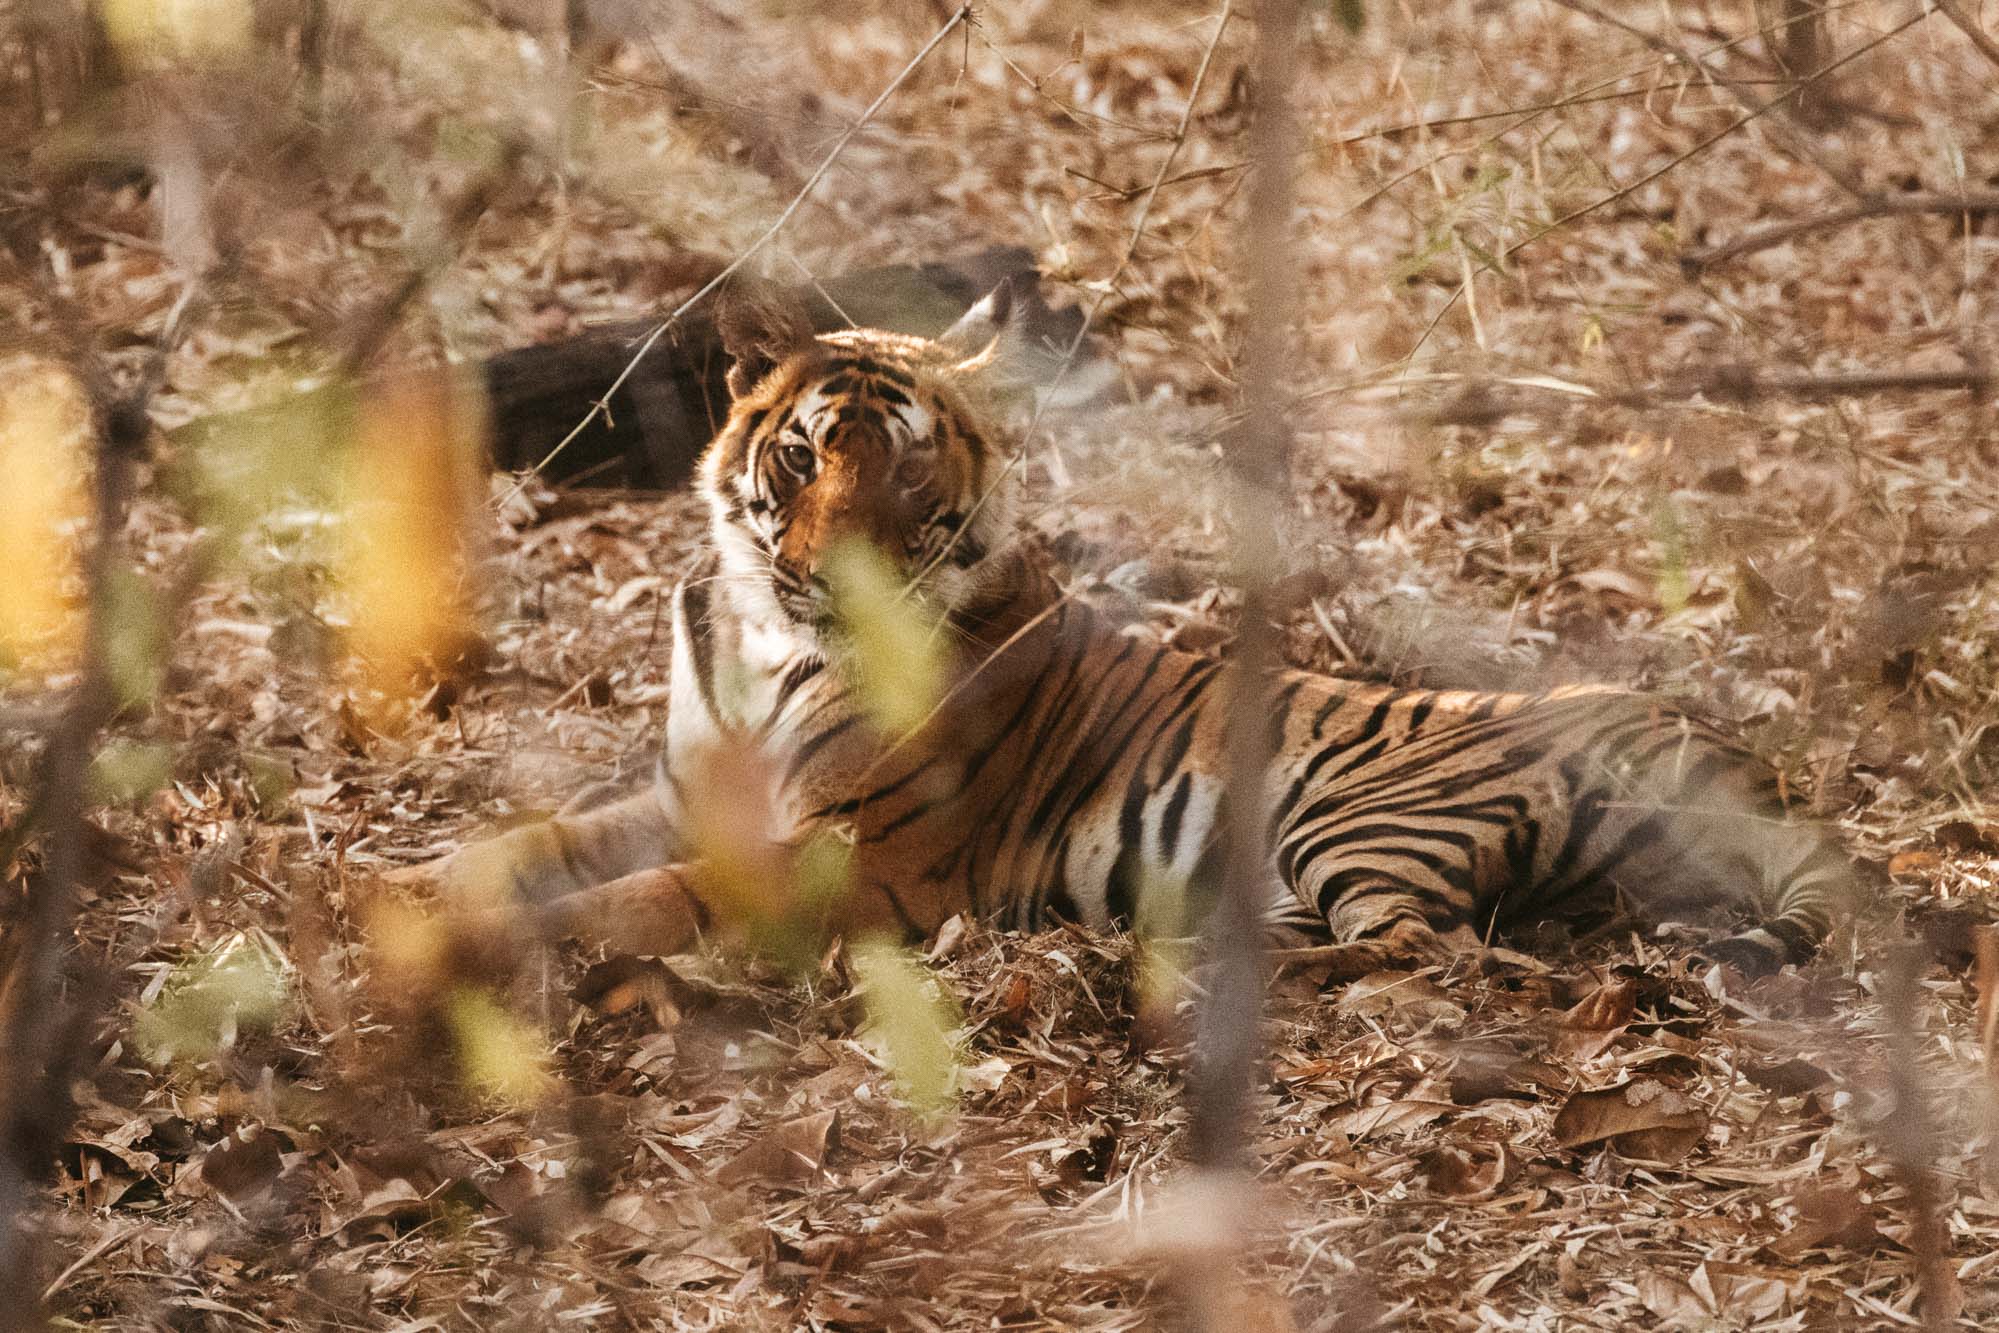 Wild Tiger on Safari in Ranthambore National Park, India via Find Us Lost